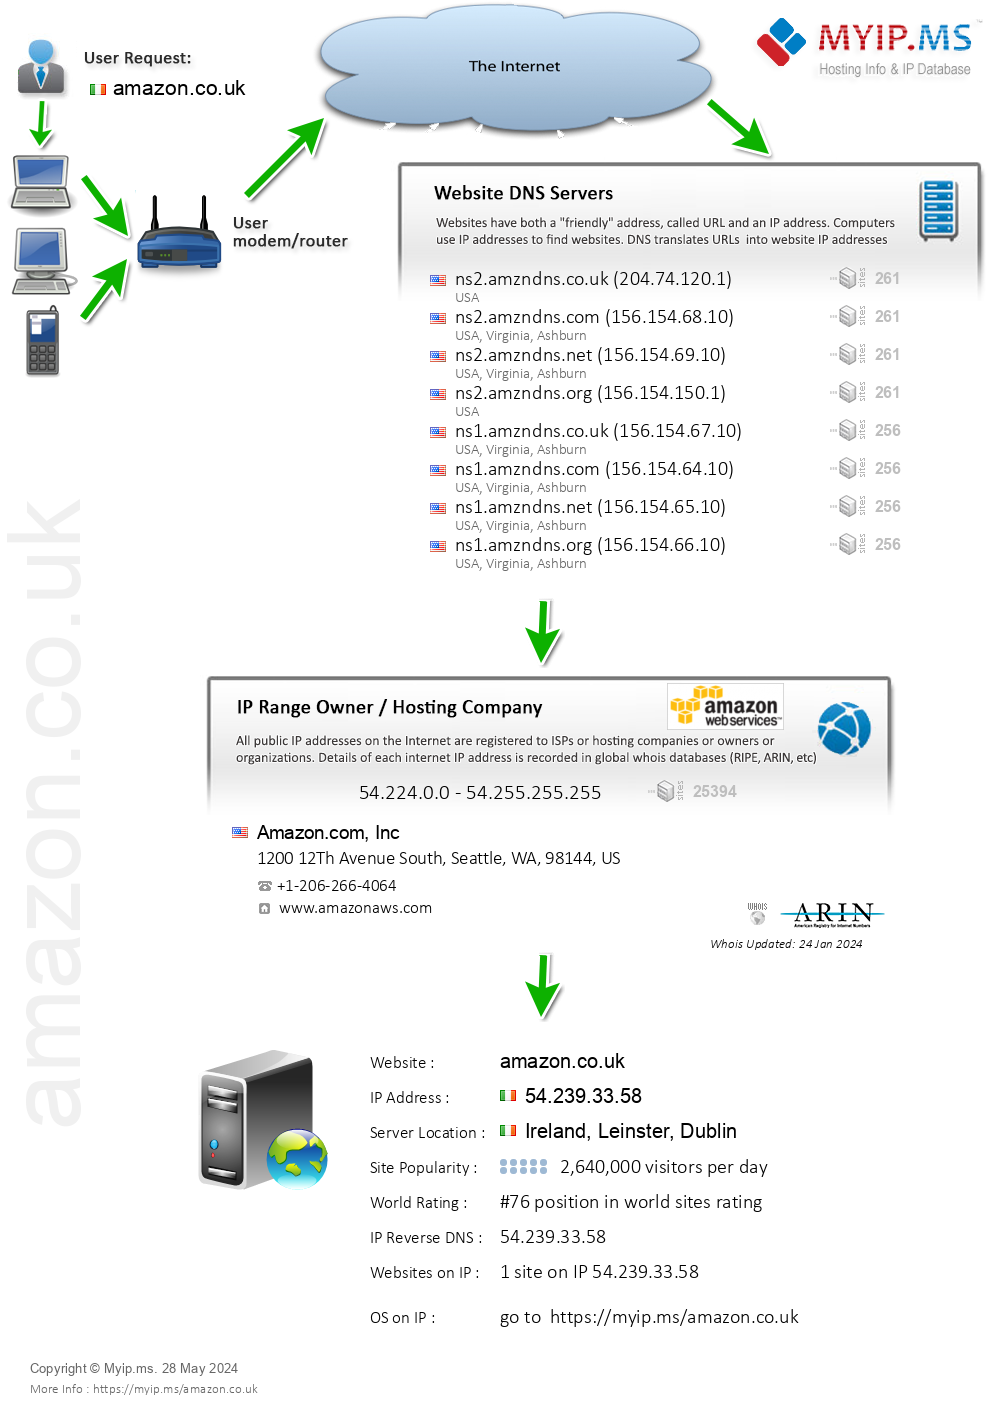 Amazon.co.uk - Website Hosting Visual IP Diagram